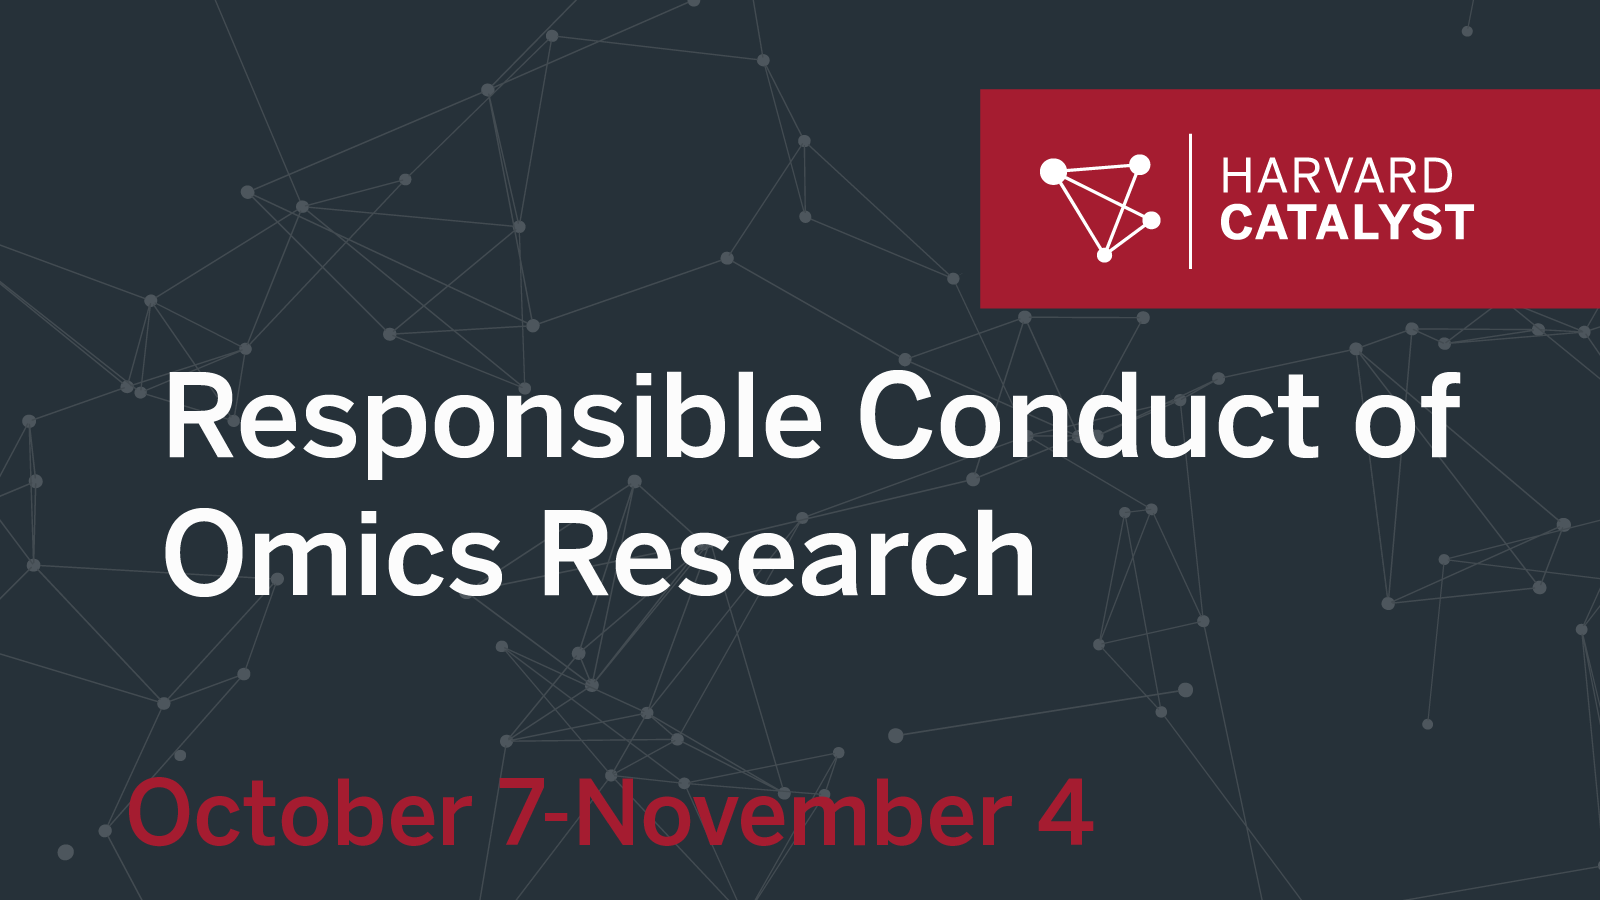 Harvard Catalyst Responsible Conduct of Omics Research October 7-November 4